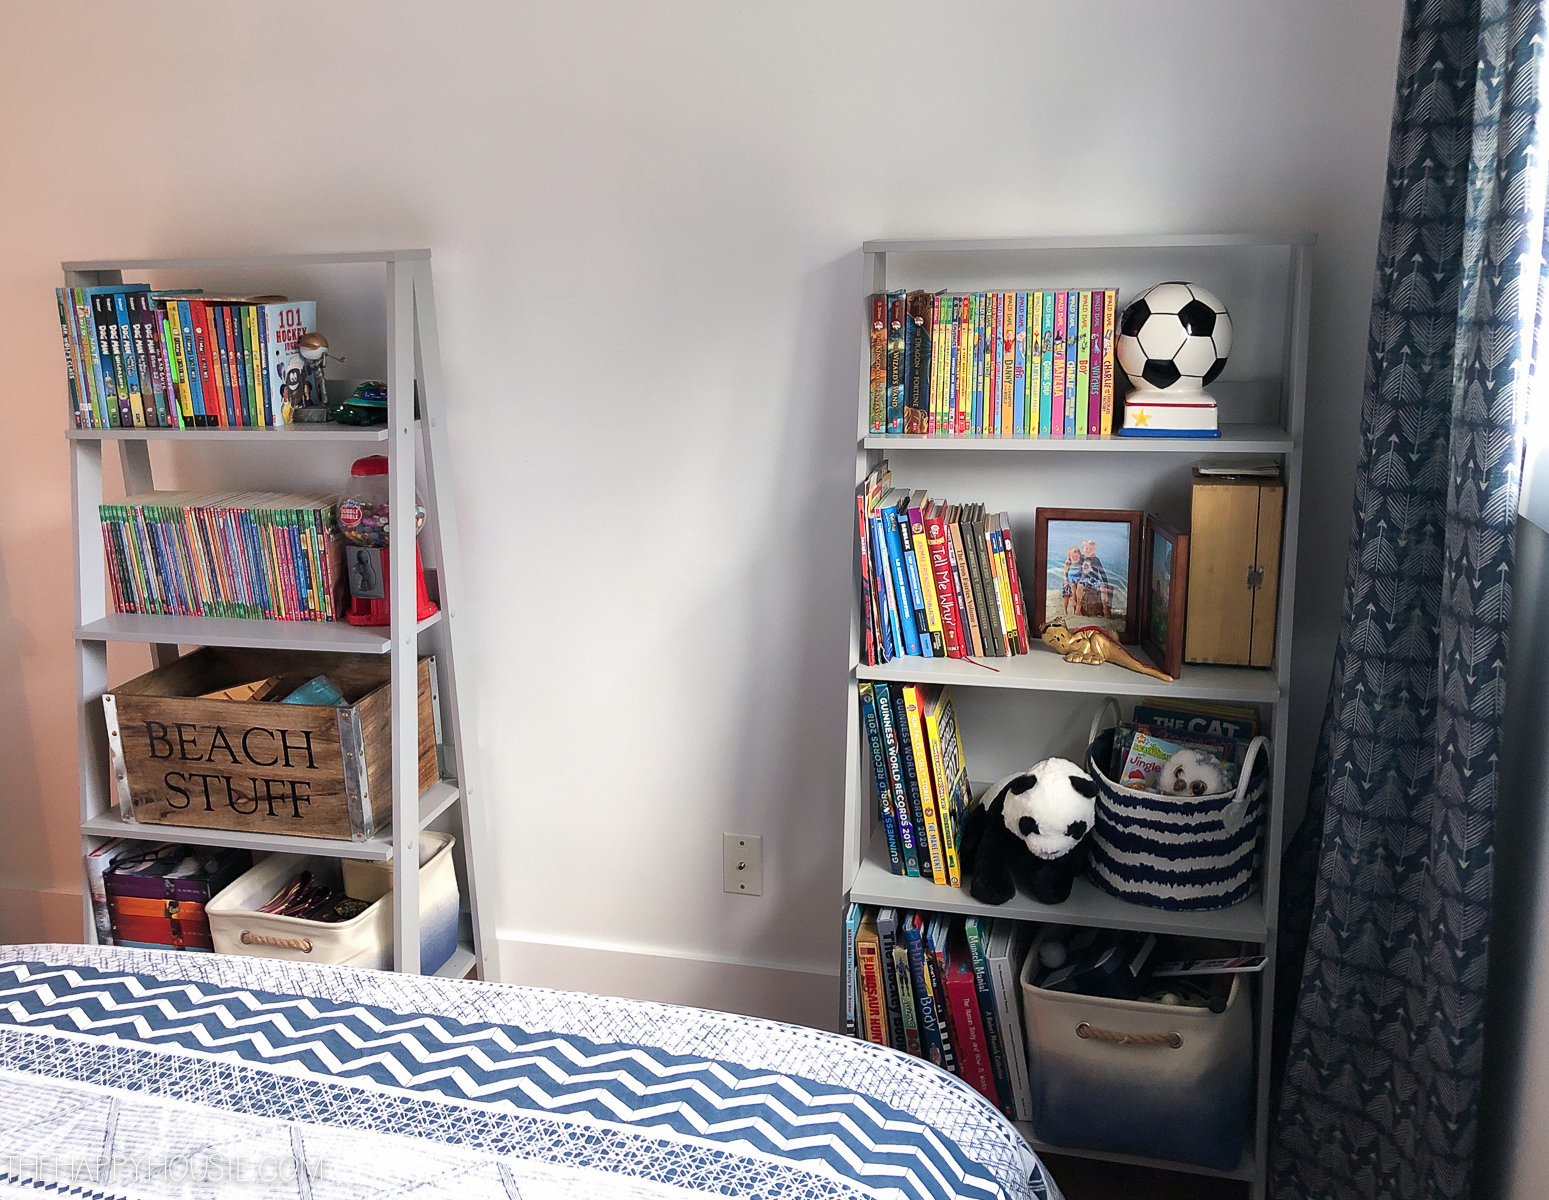 Two bookshelves in the bedroom.